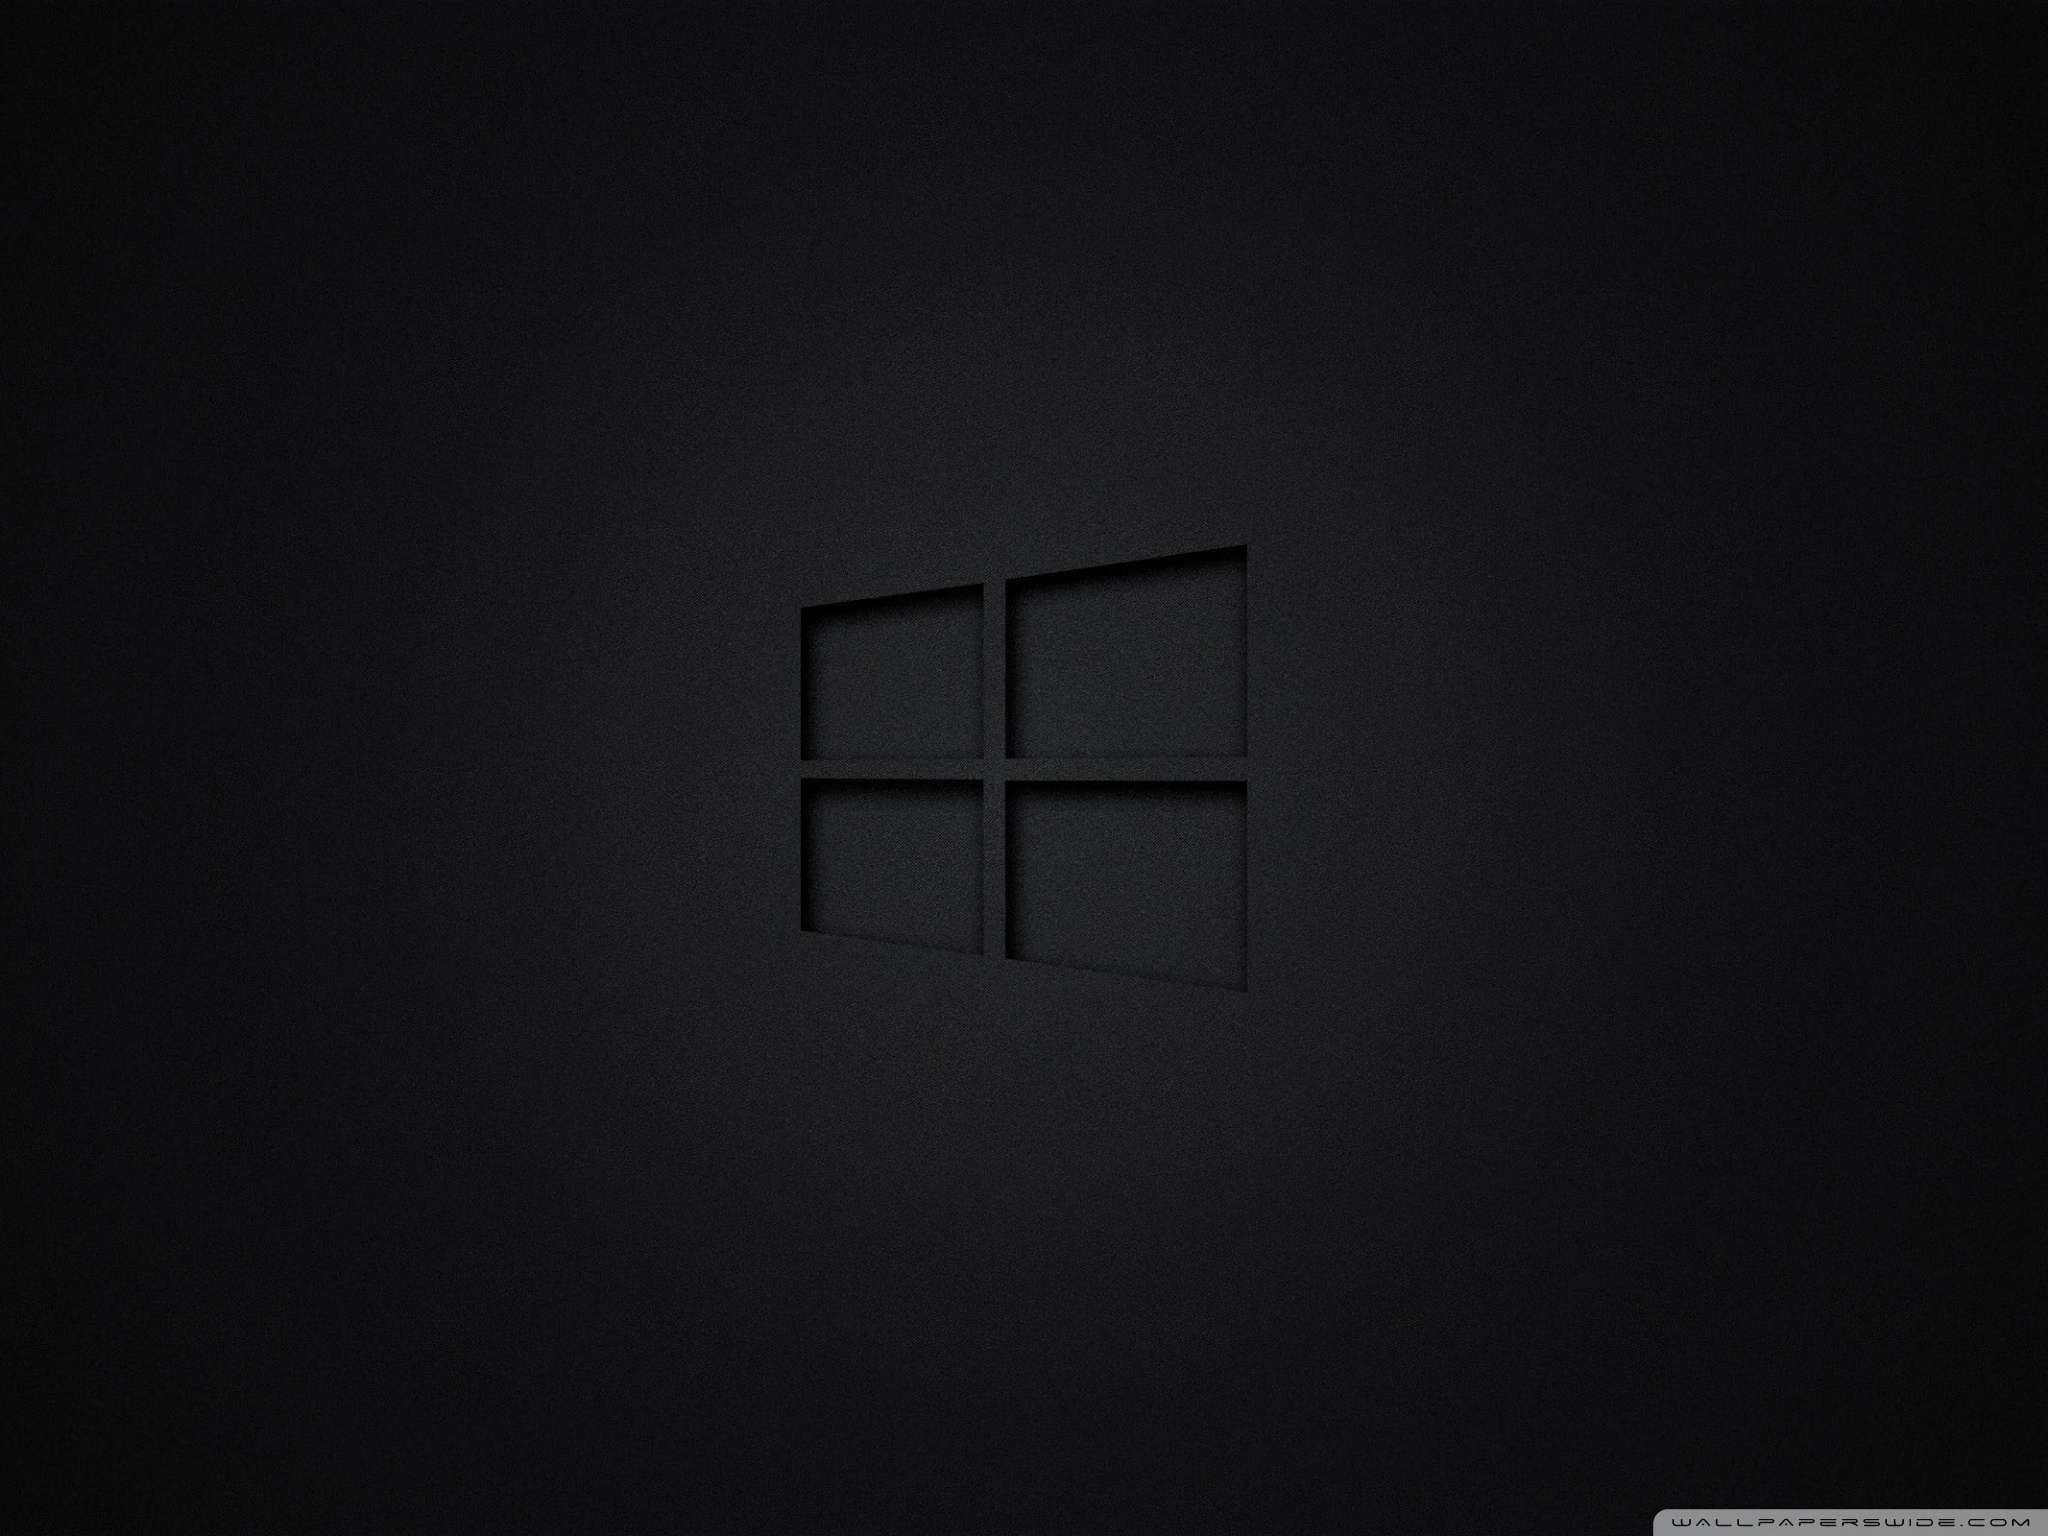 Windows 10 Black Ultra Hd Desktop Background Wallpaper For 4k Uhd Tv Multi Display Dual Monitor Tablet Smartphone